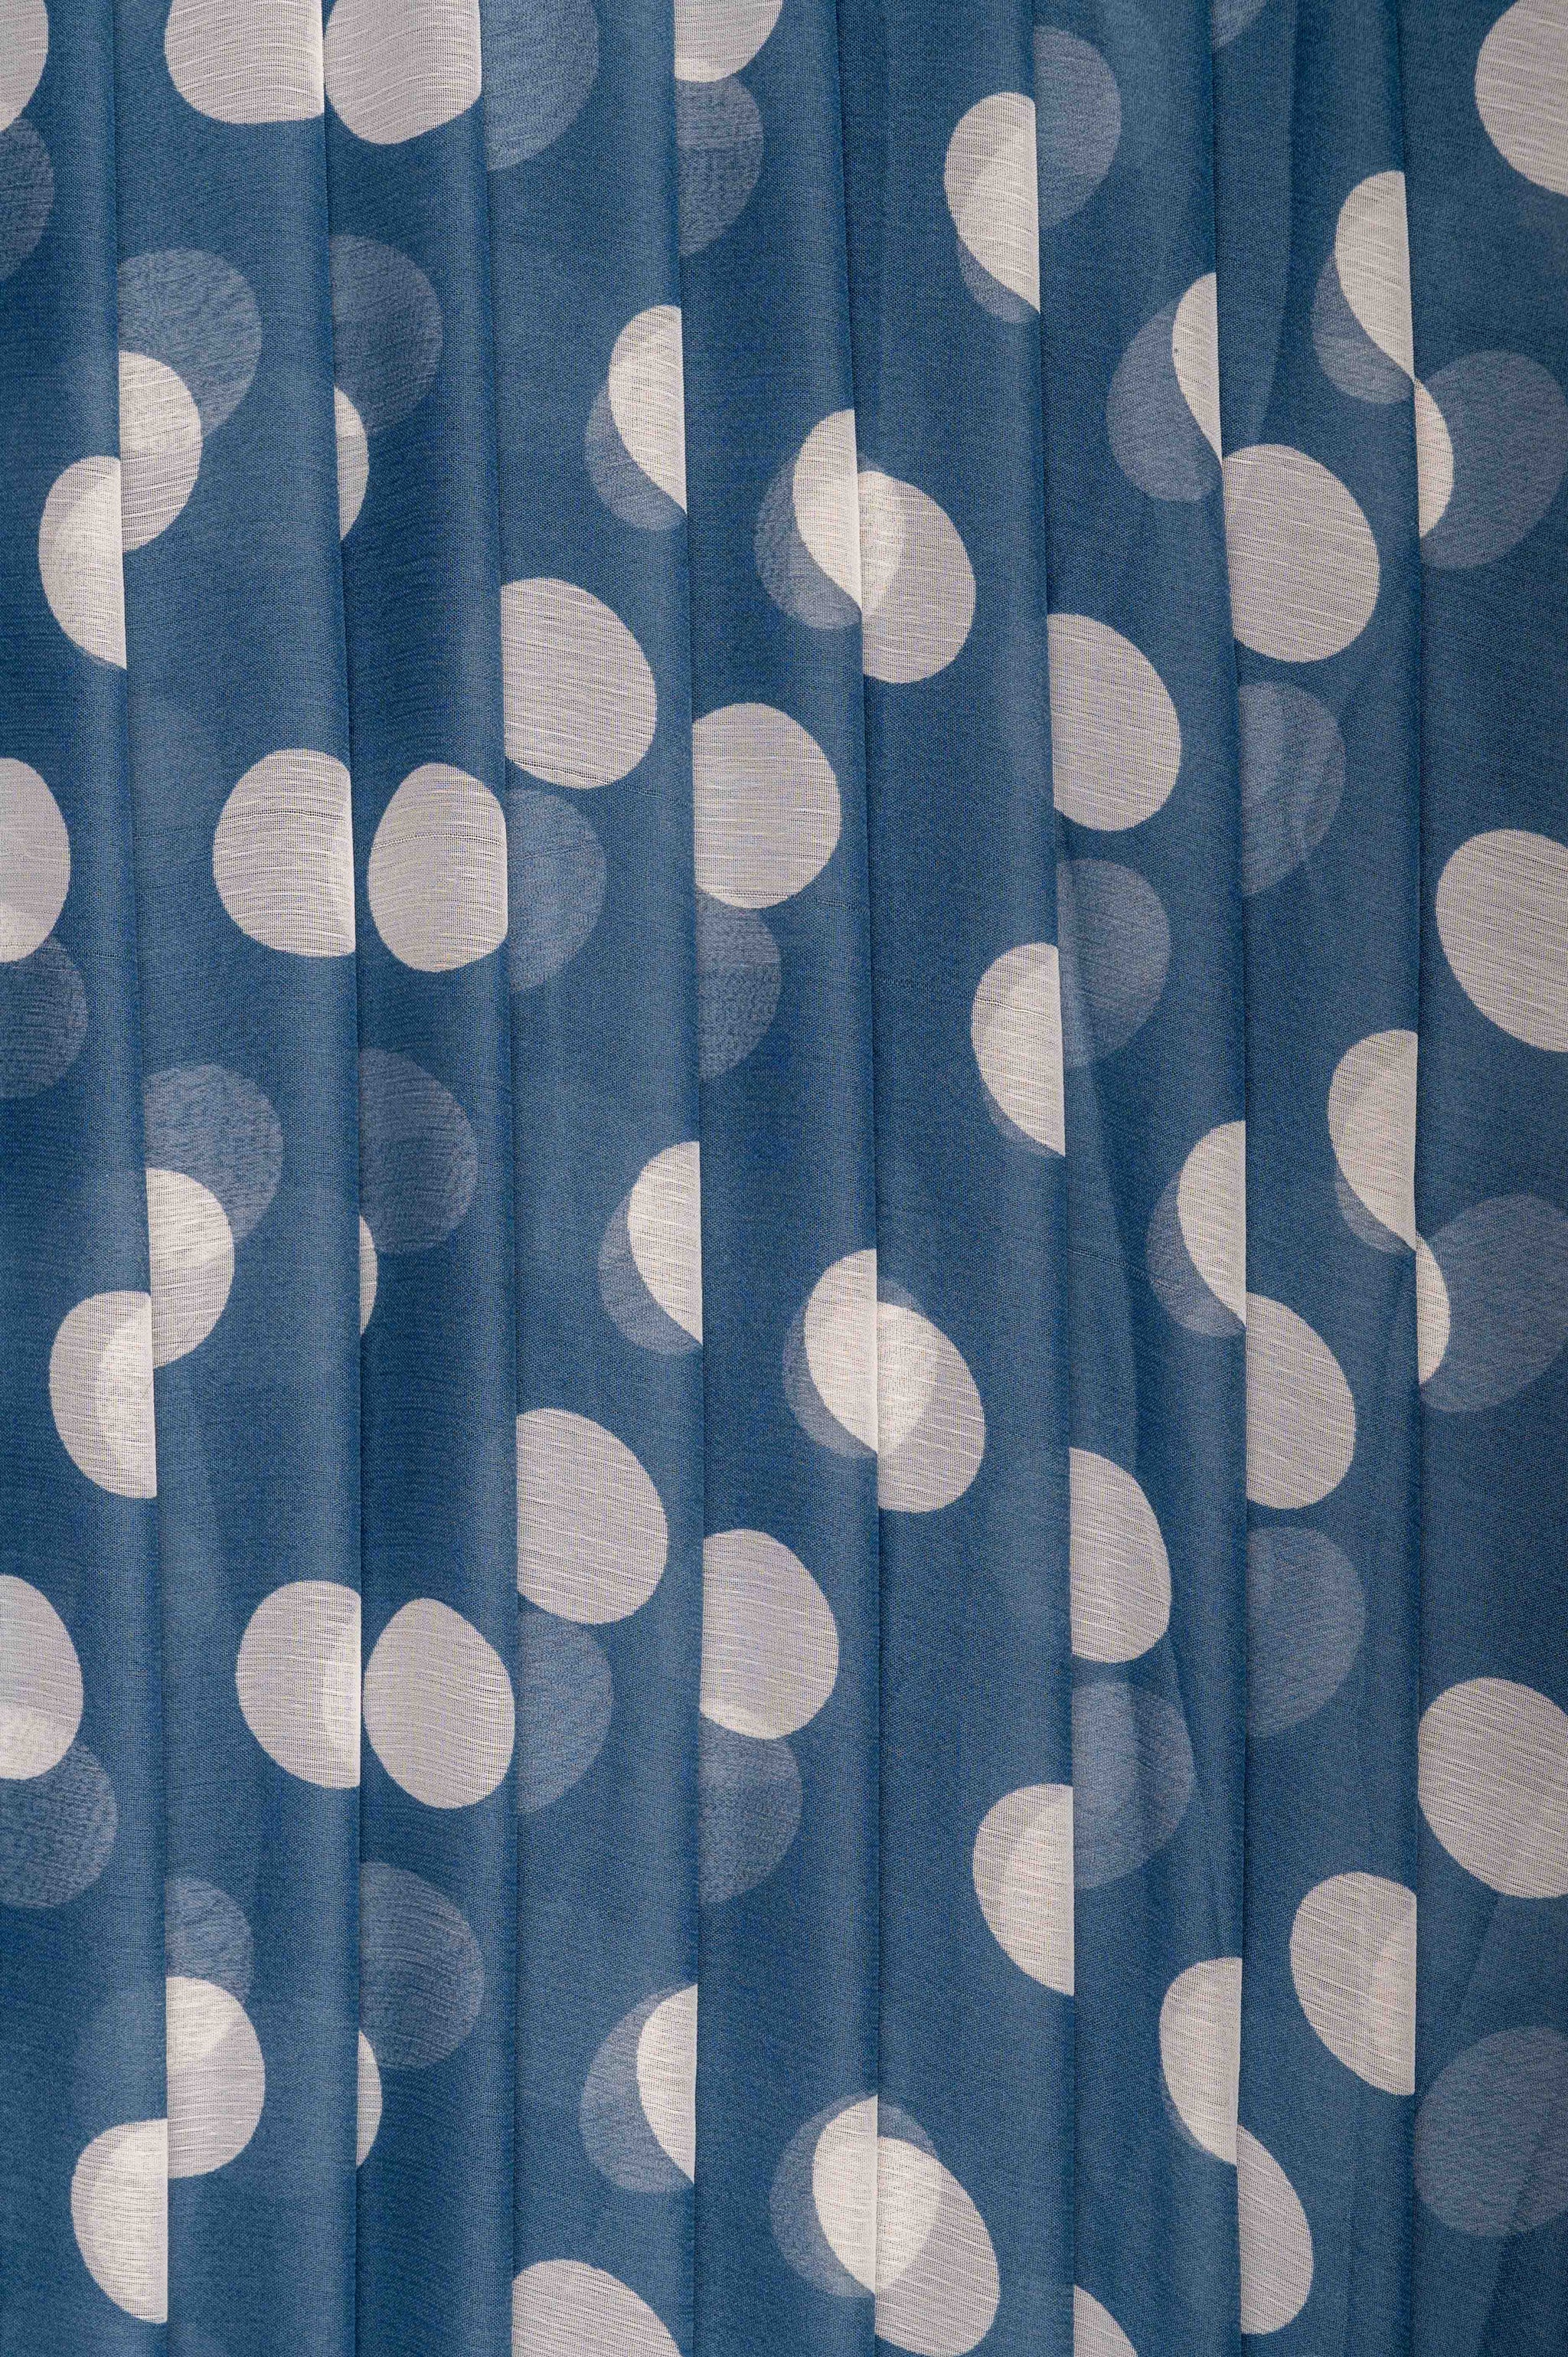 Indigo Blue And White Polka Dots Big Width Chiffon Fabric